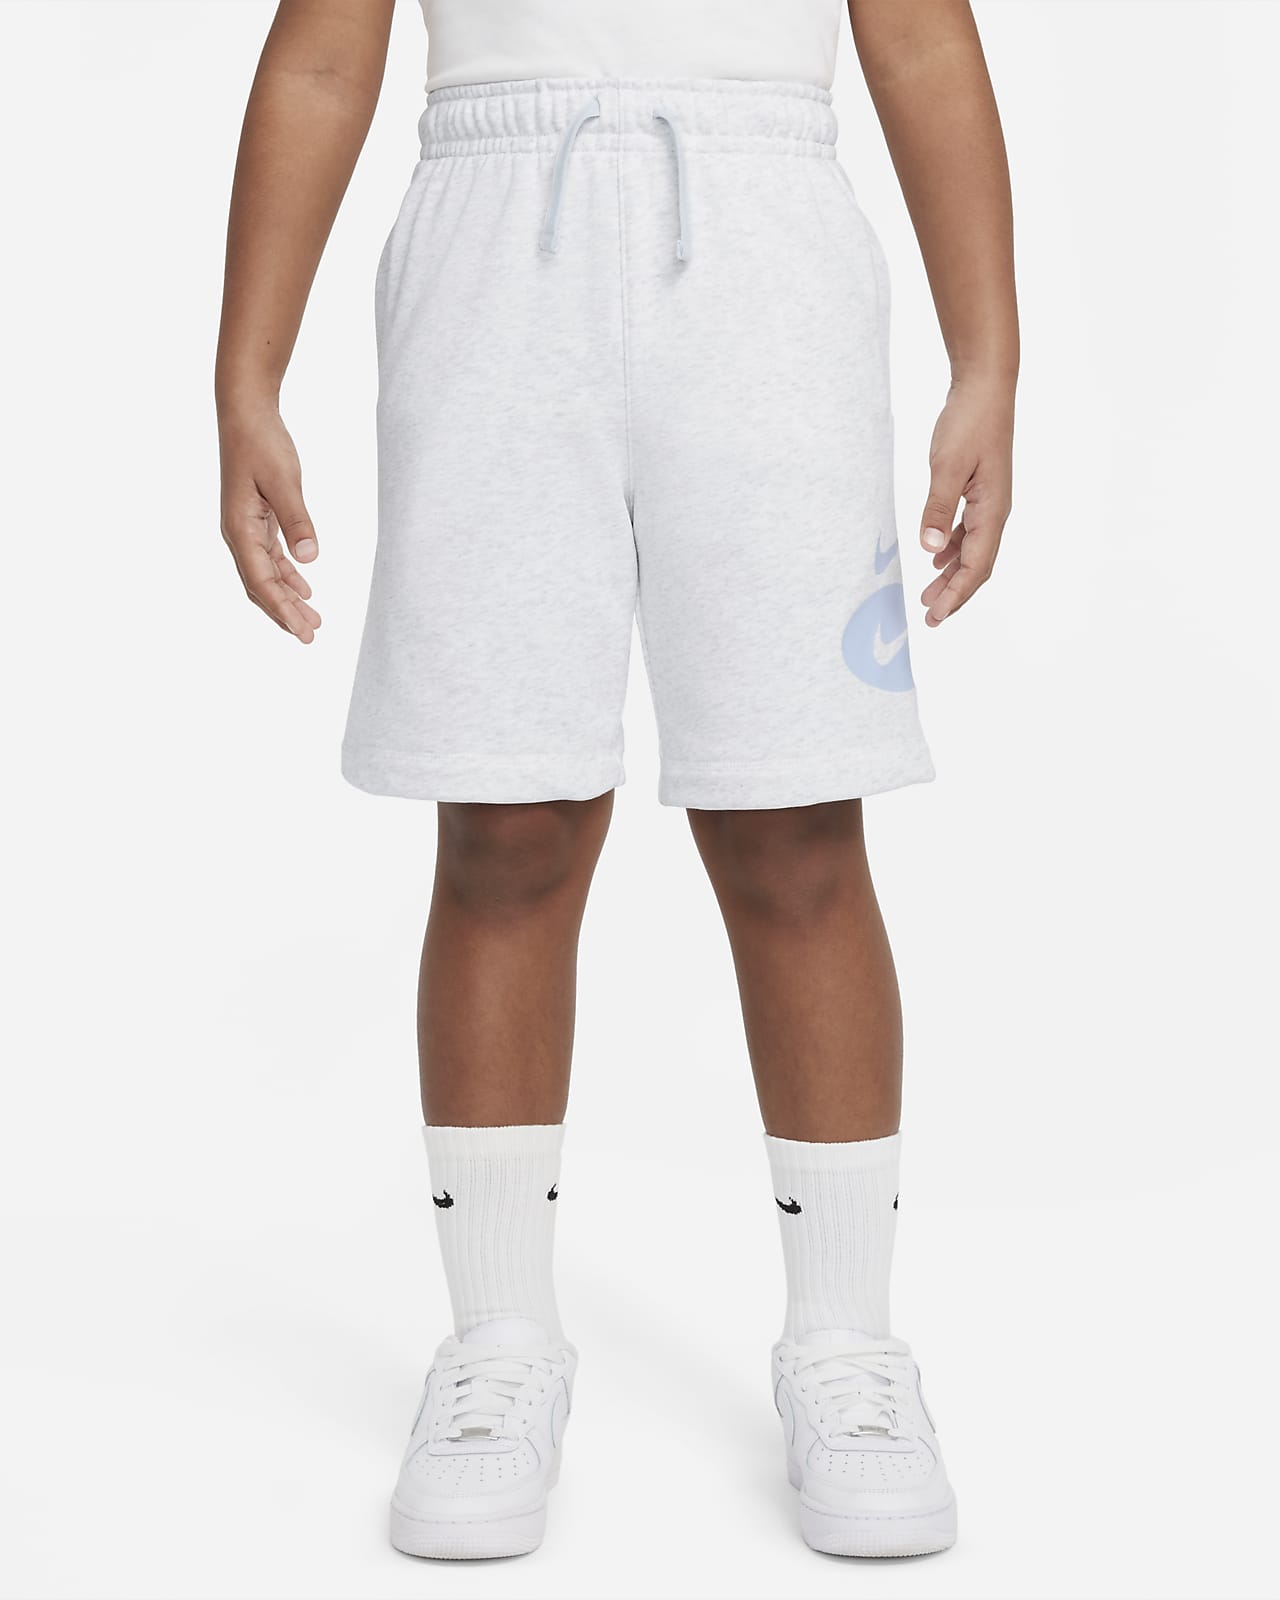 Nike Sportswear Genç Çocuk (Erkek) Şortu